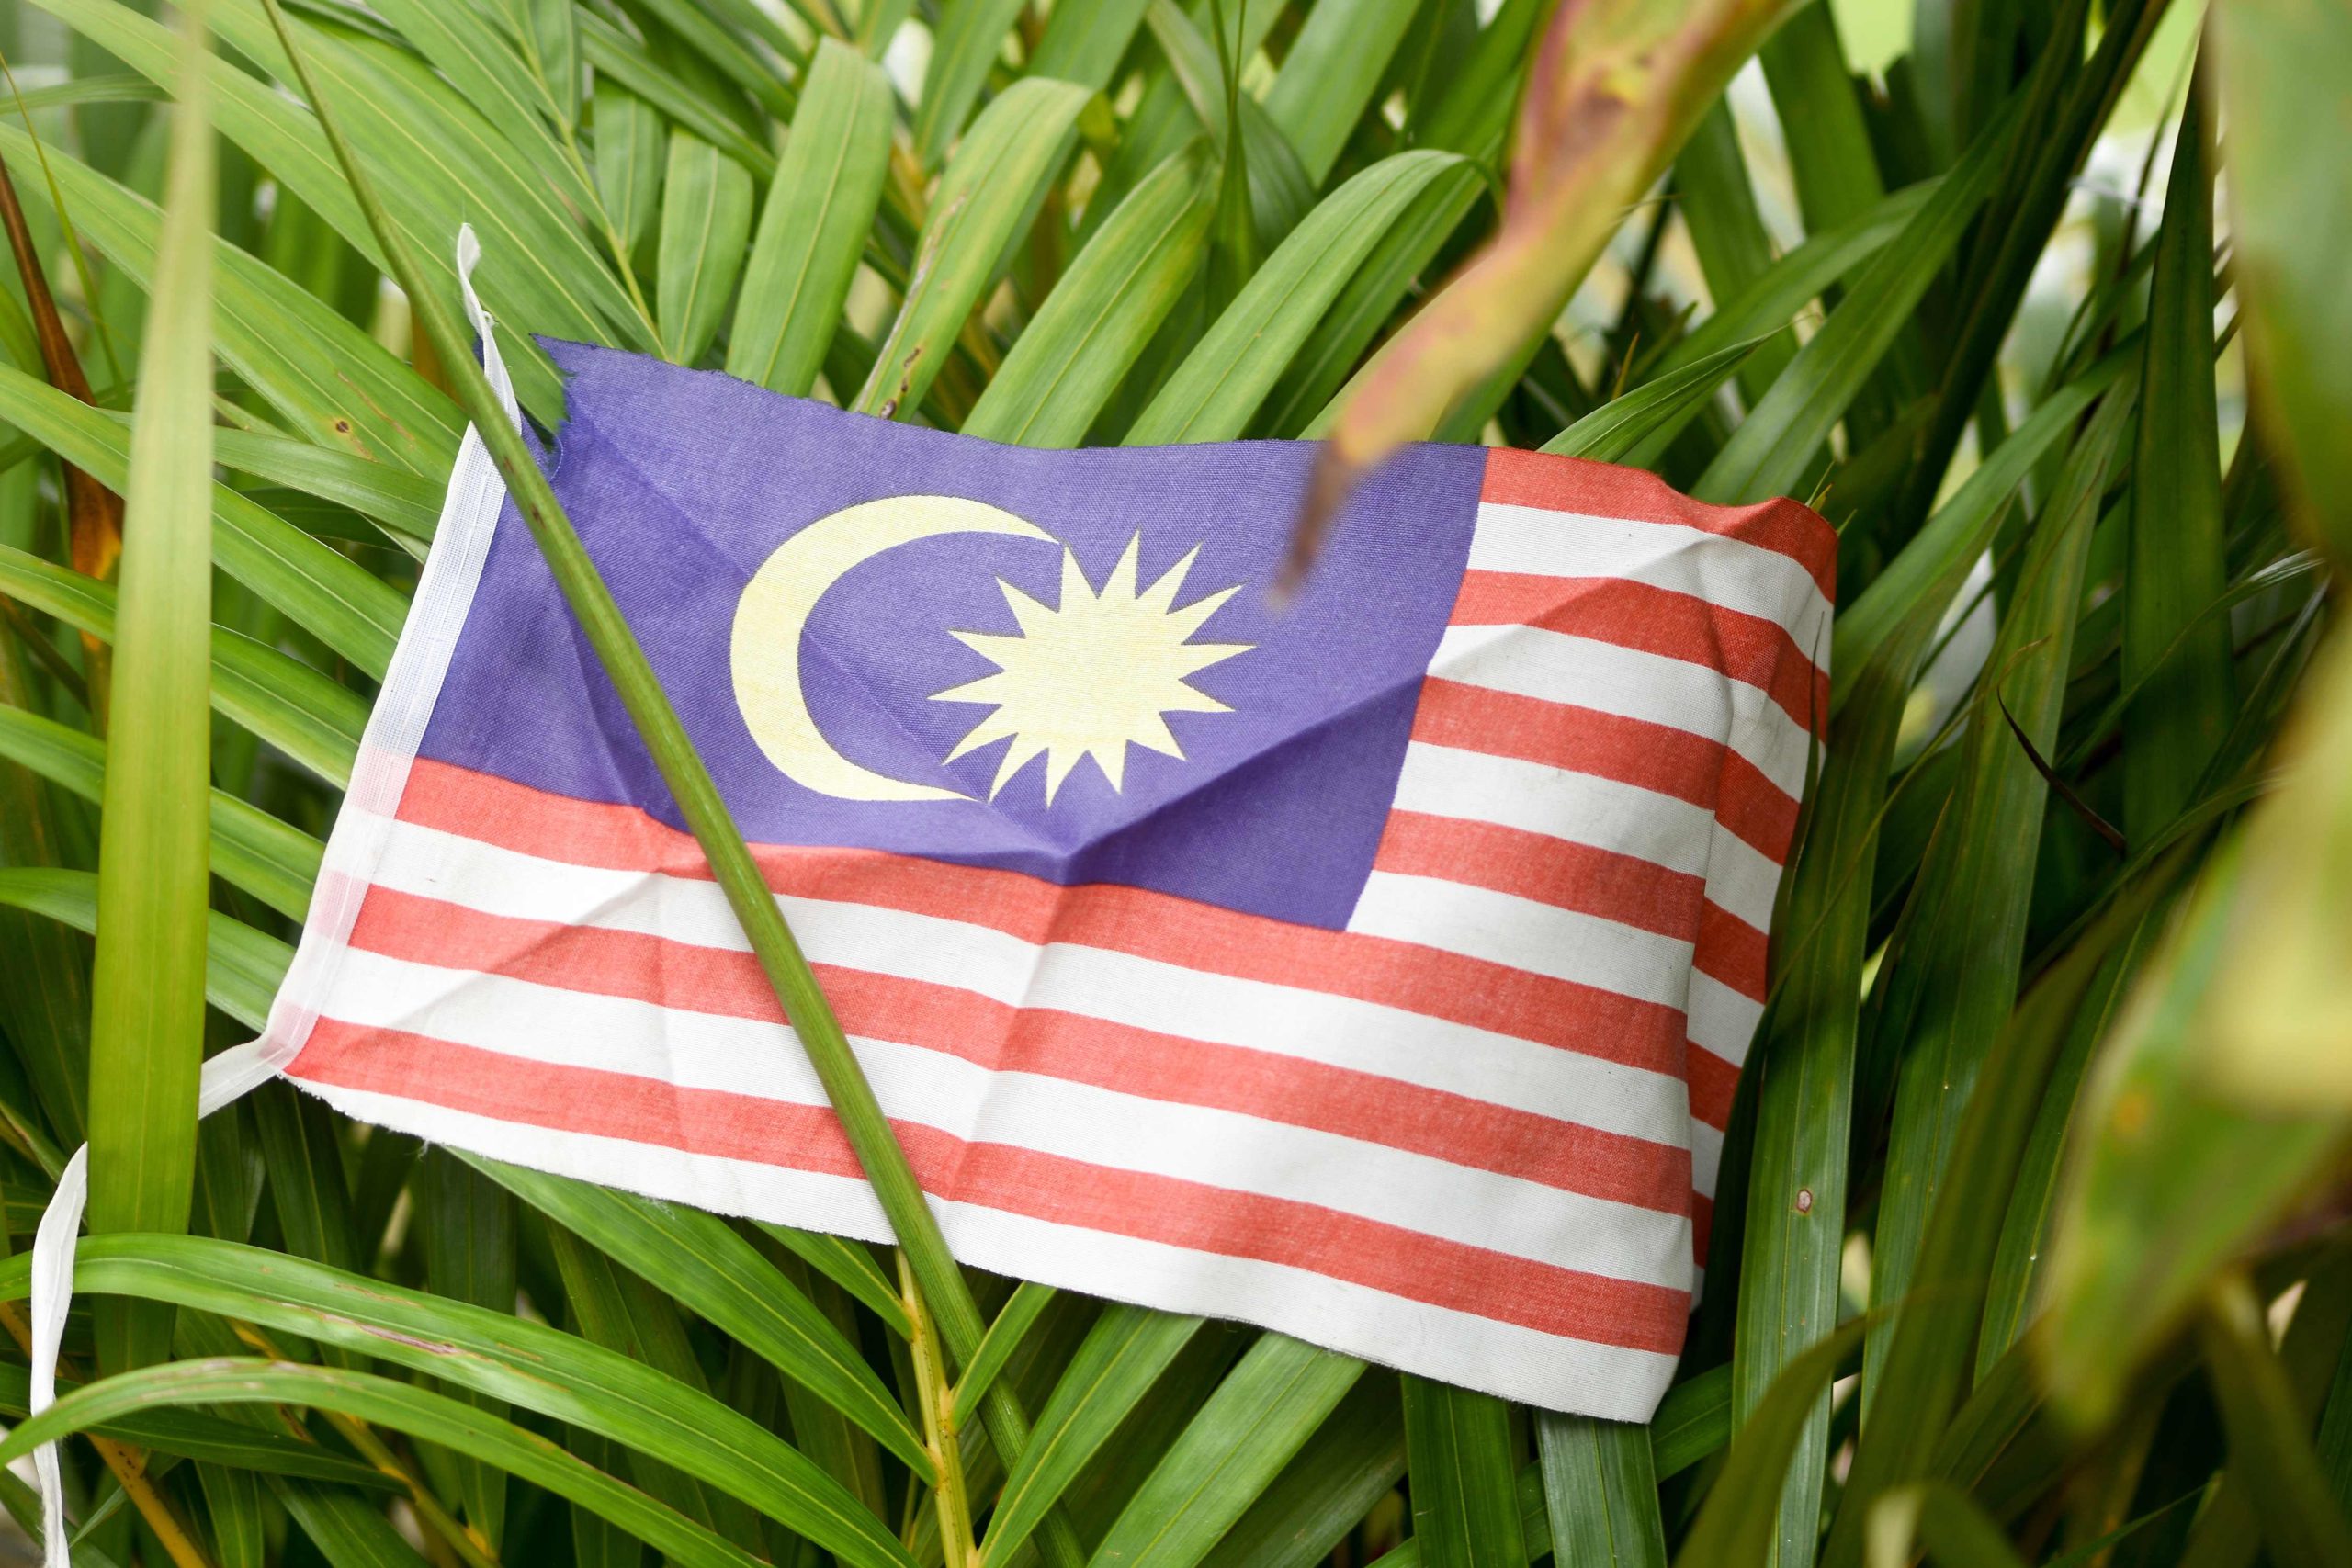 Malaysian National Symbols